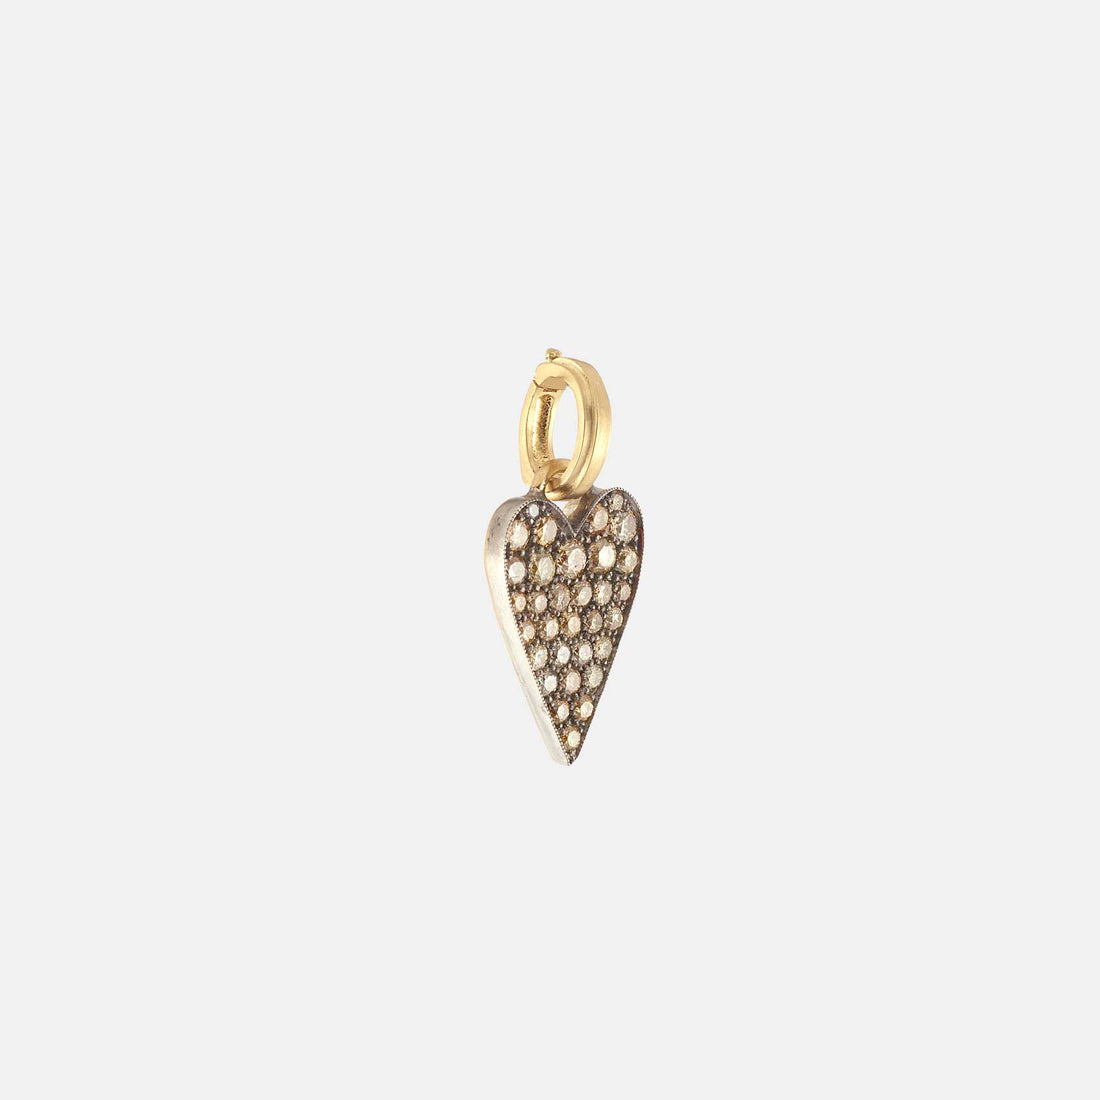 Fancy colored diamond heart pendant